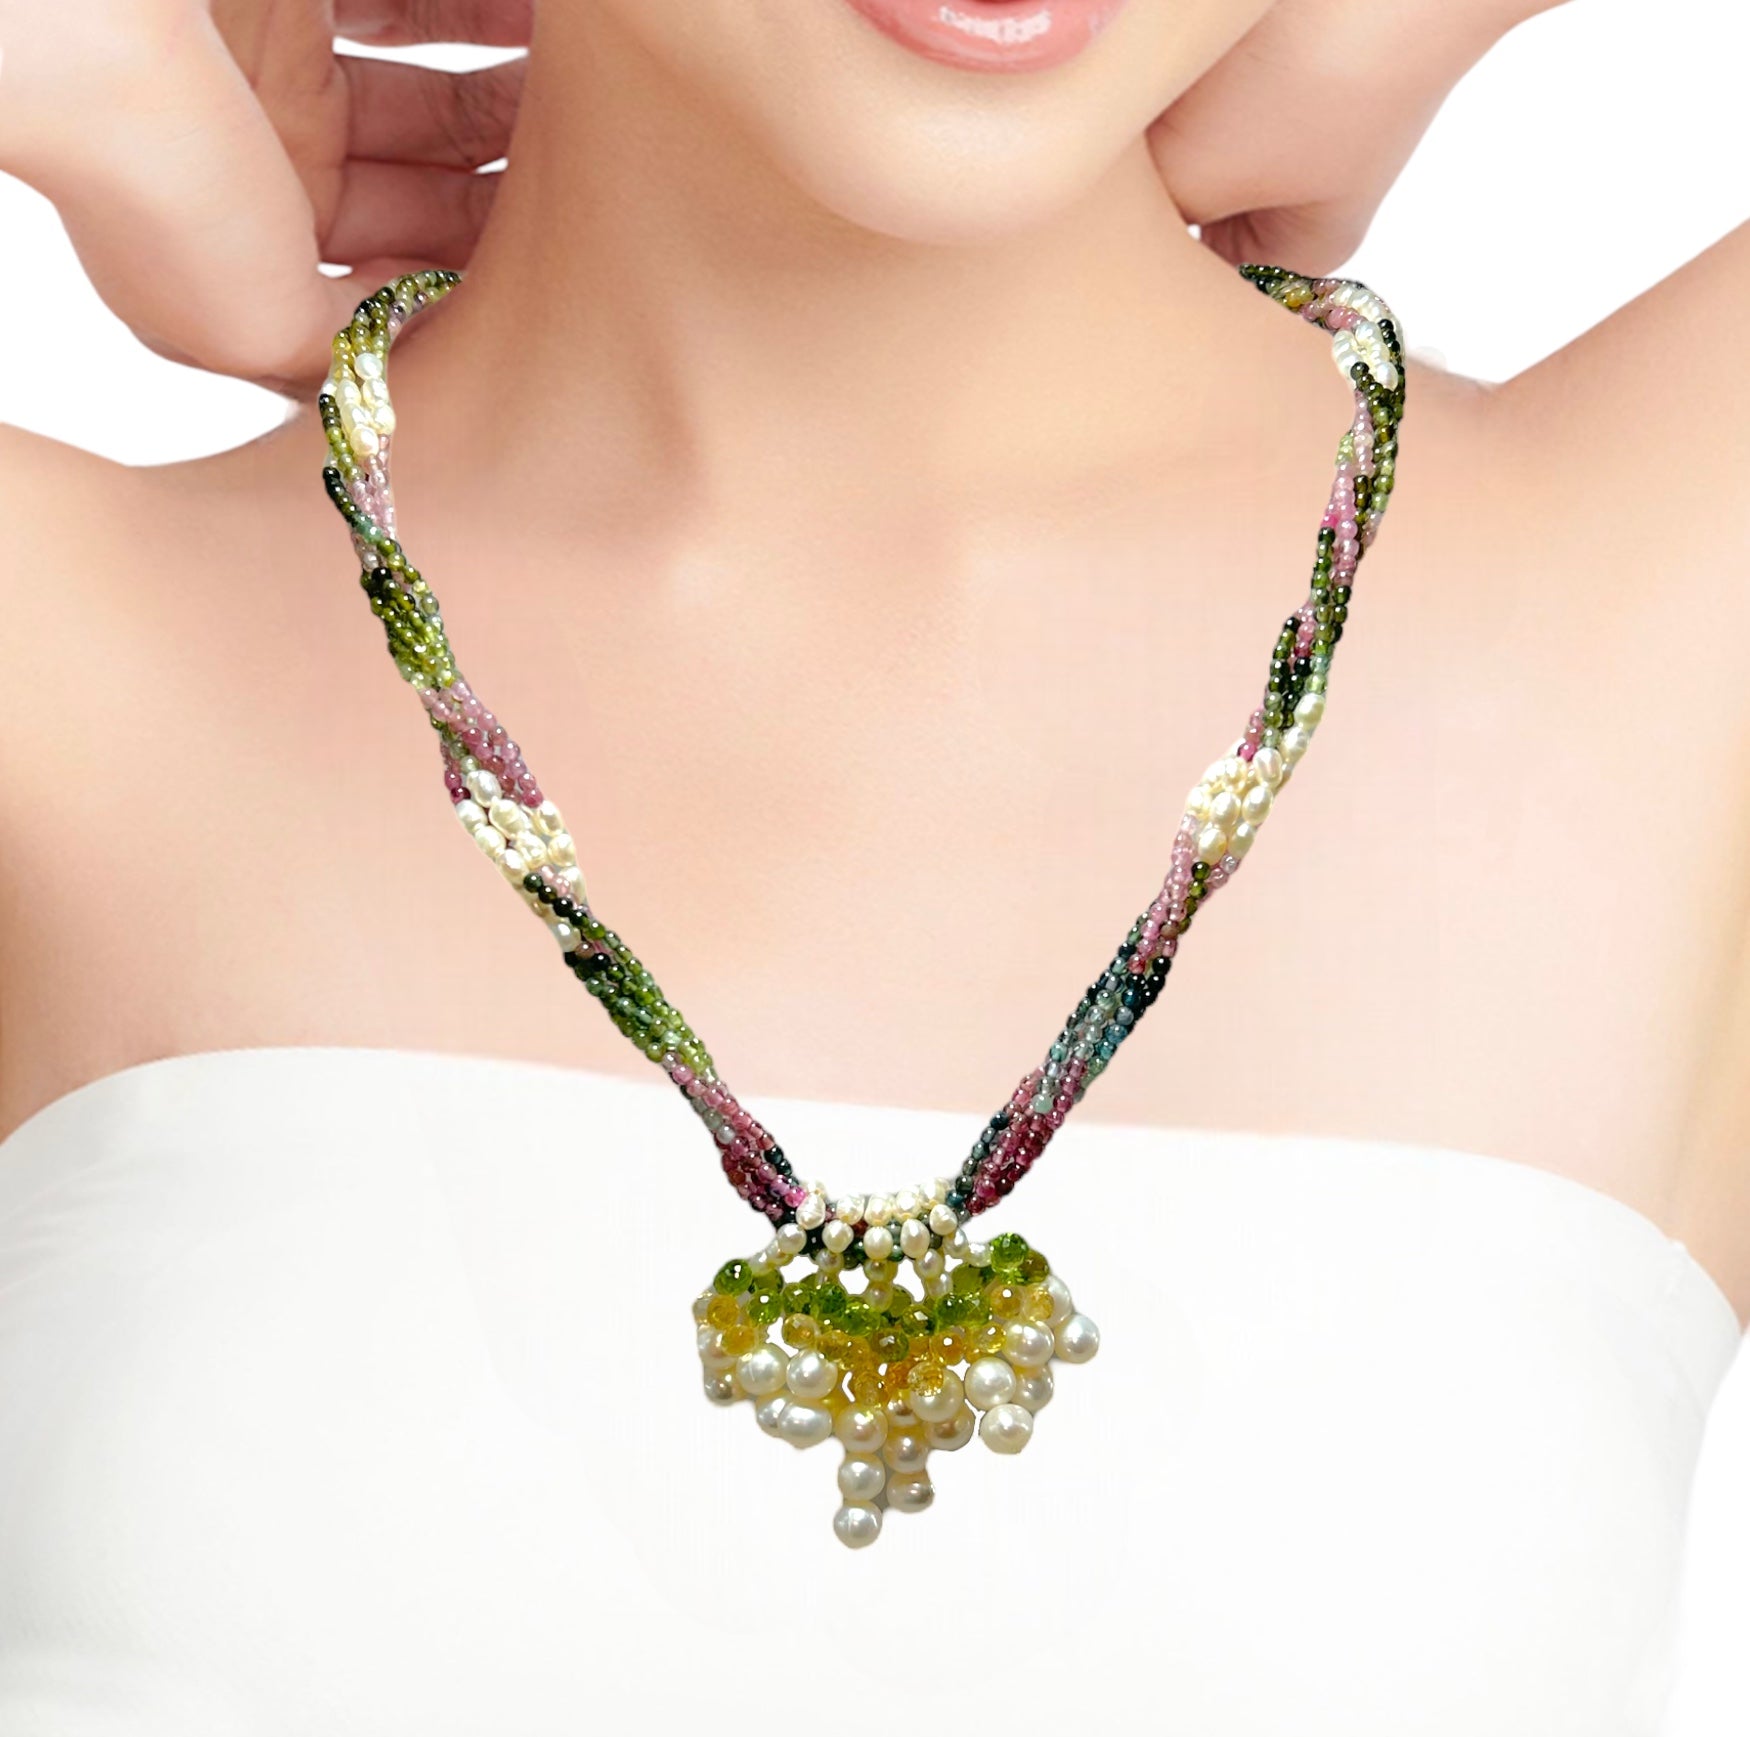 Natural Handmade Necklace 16"-18" Pearl, Peridot, Tourmaline, Citrine Gemstone Beads Jewelry